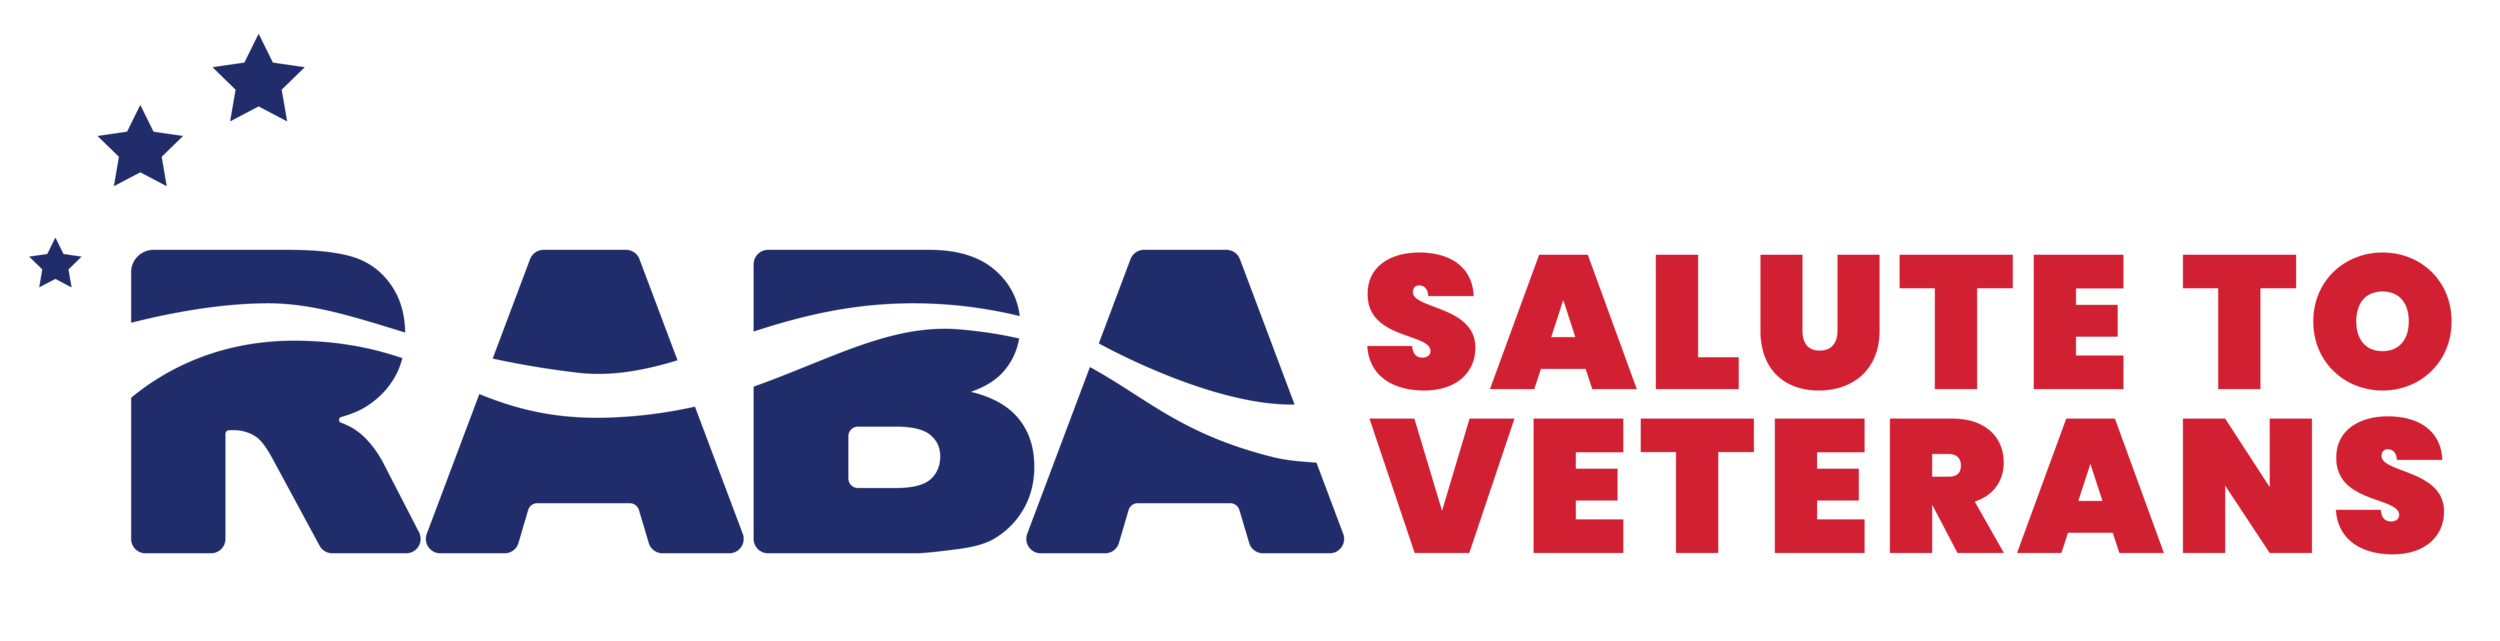 RSTV Logo_Primary.png